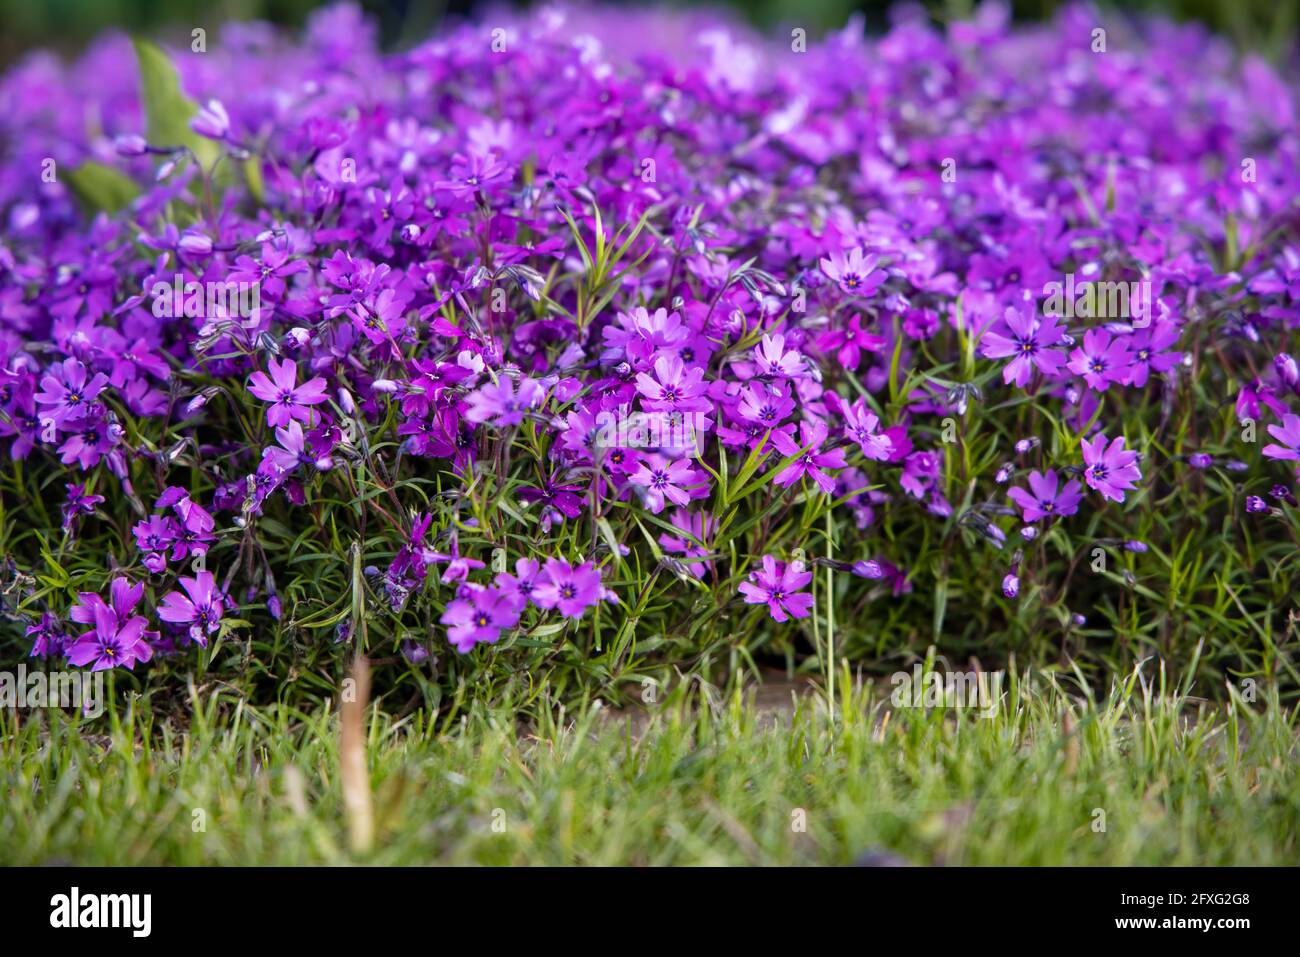 Flowers of Phlox subulata 'Atropurpurea' (Creeping phlox) in the garden in early June. Bright purple carpet flowers on a sunny day. Stock Photo